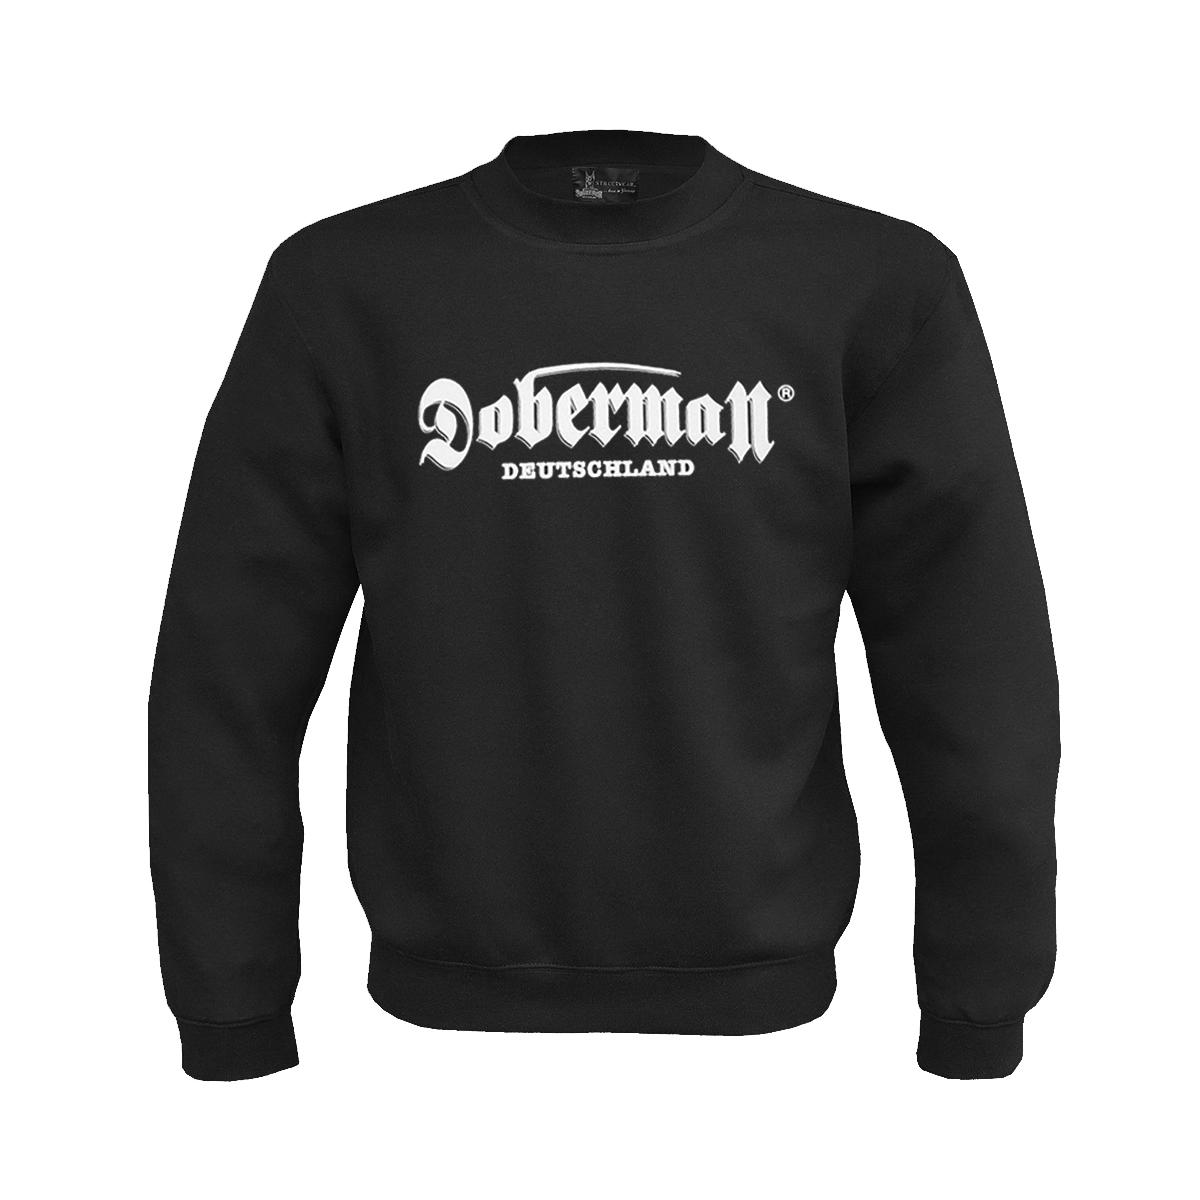 Doberman - Männer Pullover - High Aggressive